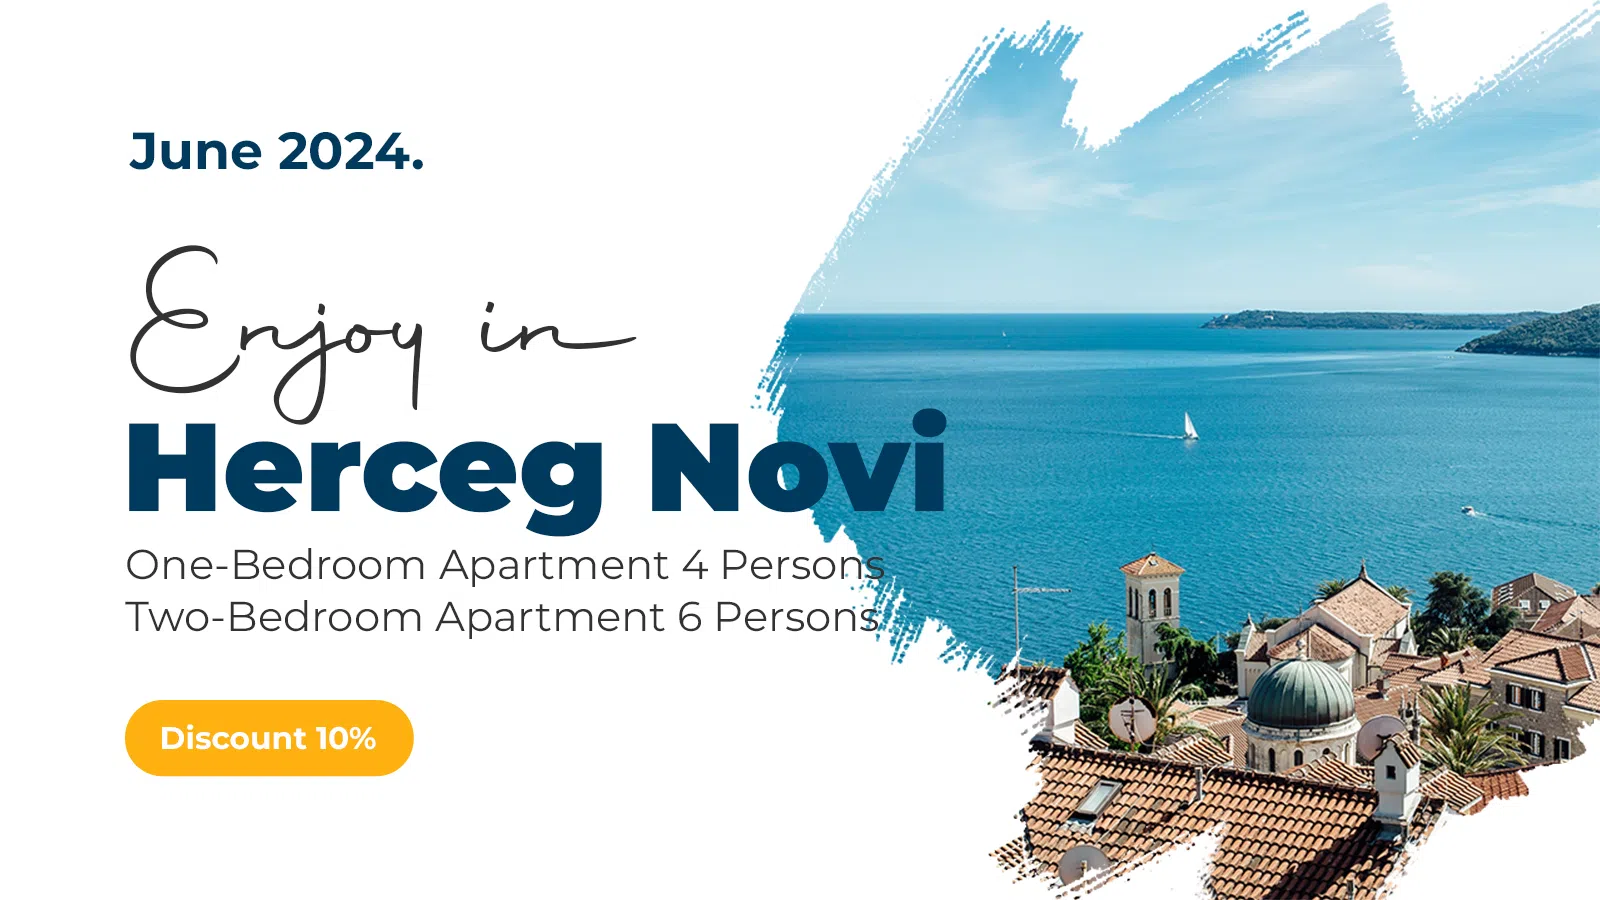 Holiday in Herceg Novi - June  2024.